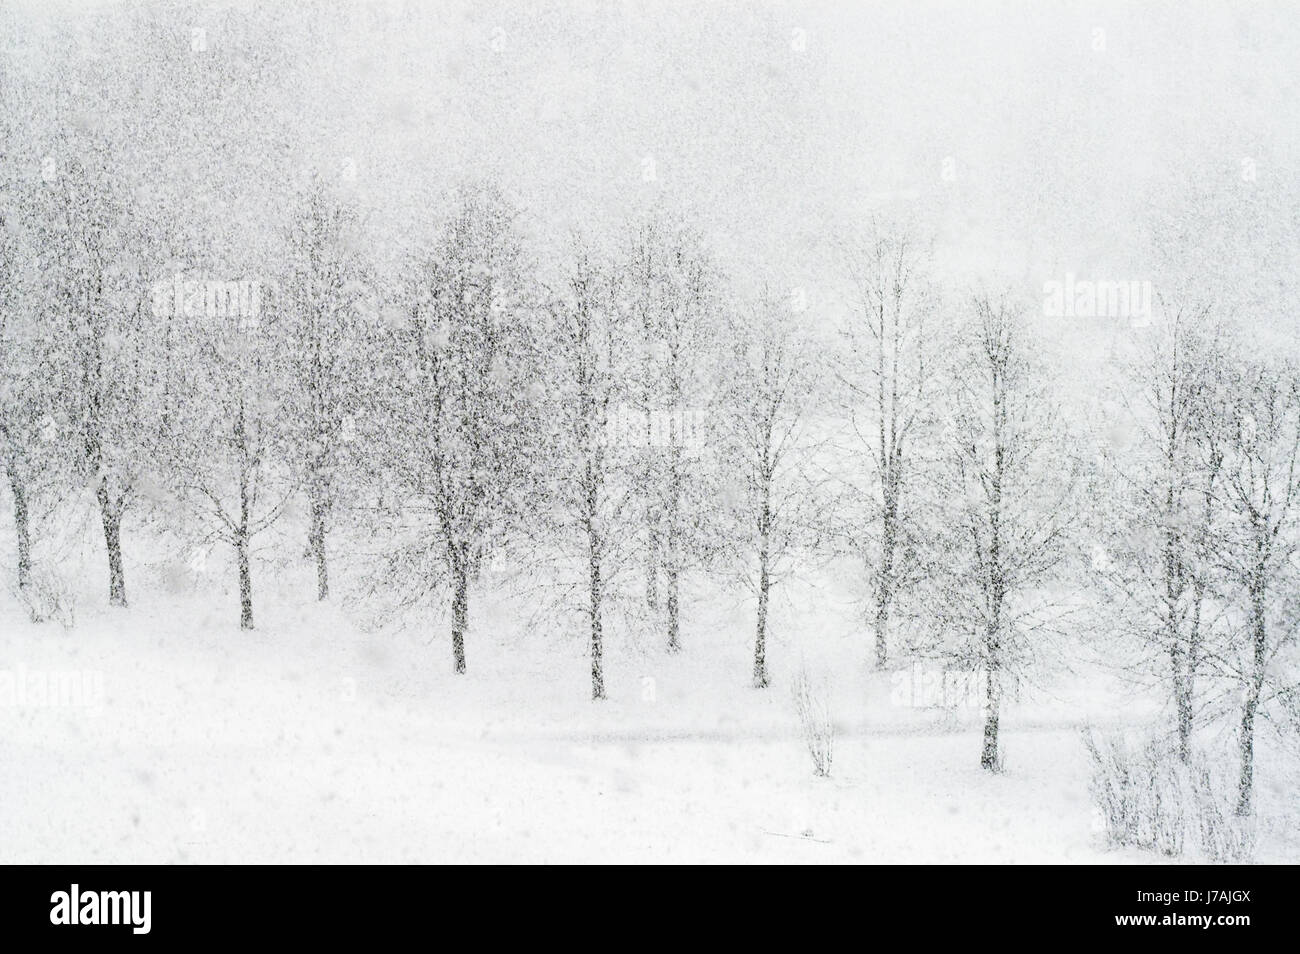 Baum Bäume Parken Garten Winter Feld Schnee Koks Kokain Material Medikament Narkose Stockfoto